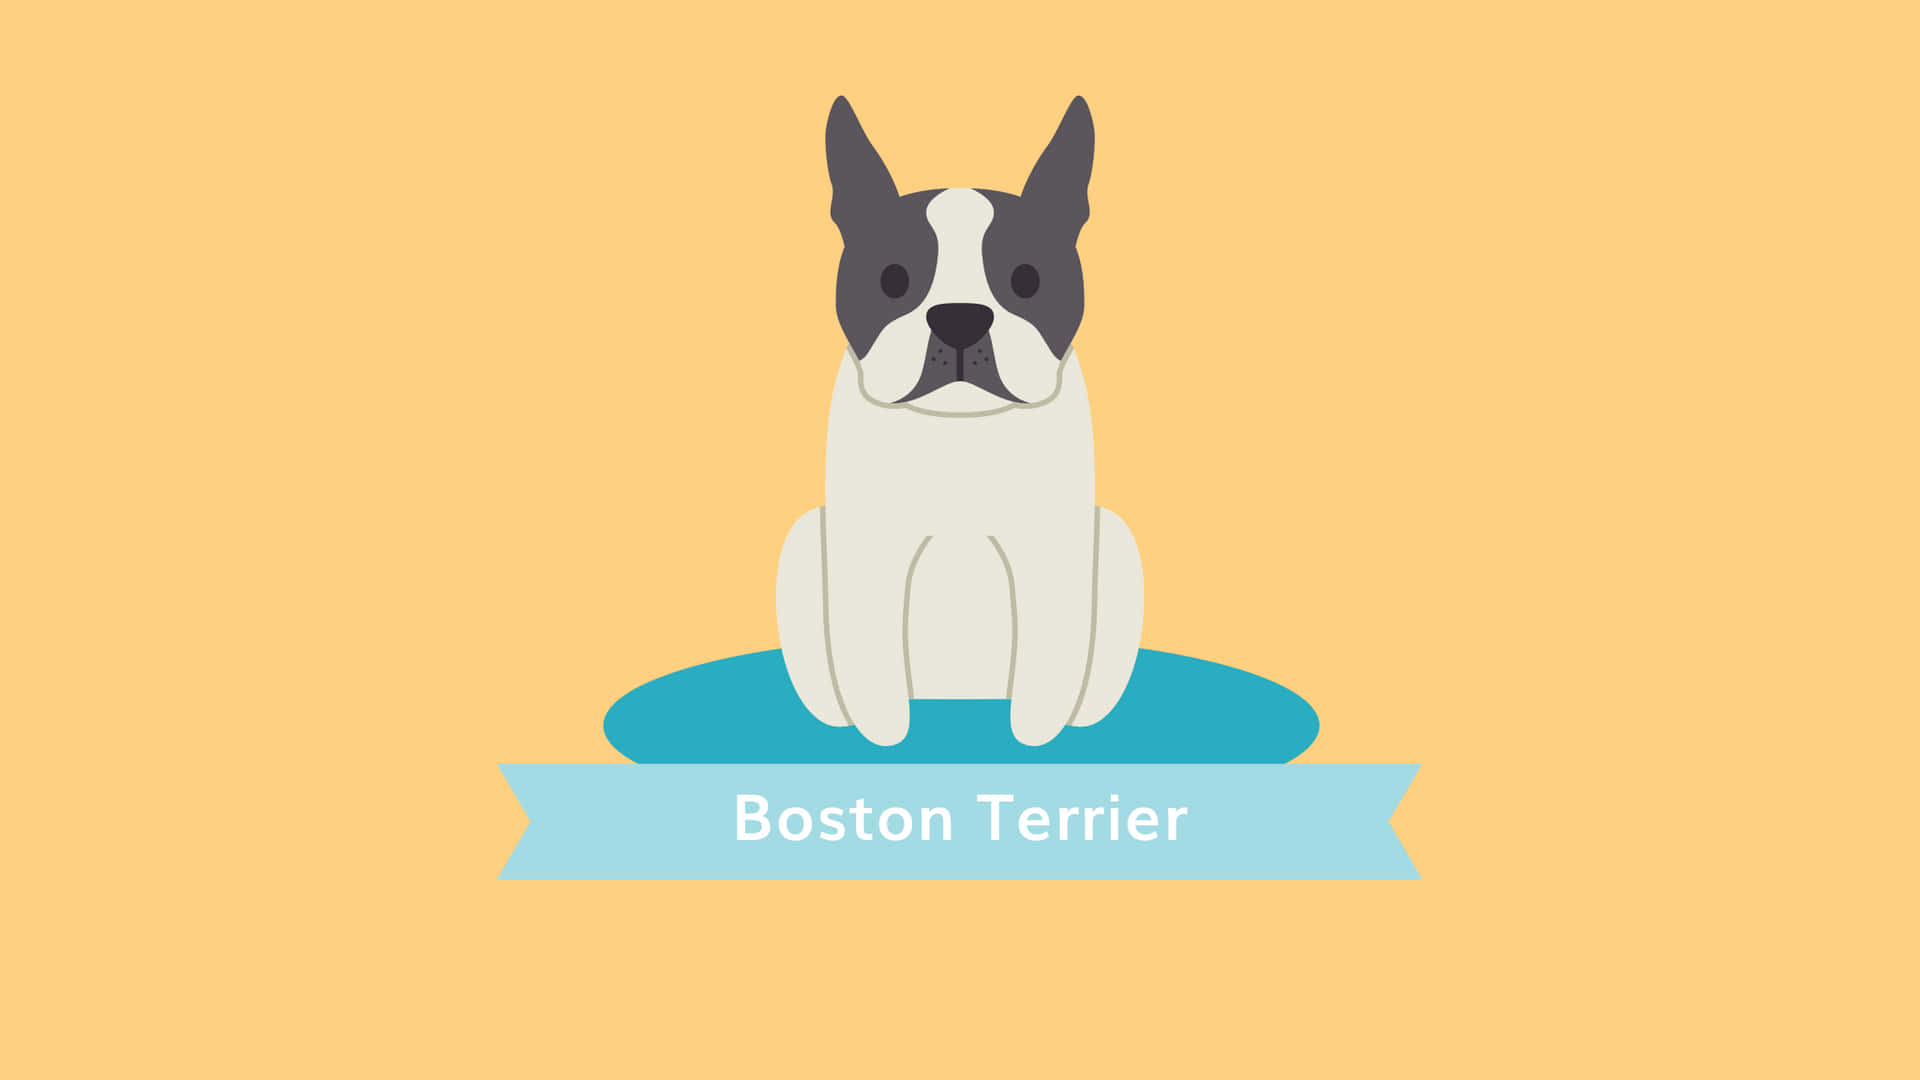 Carinaimmagine D'arte Di Un Boston Terrier